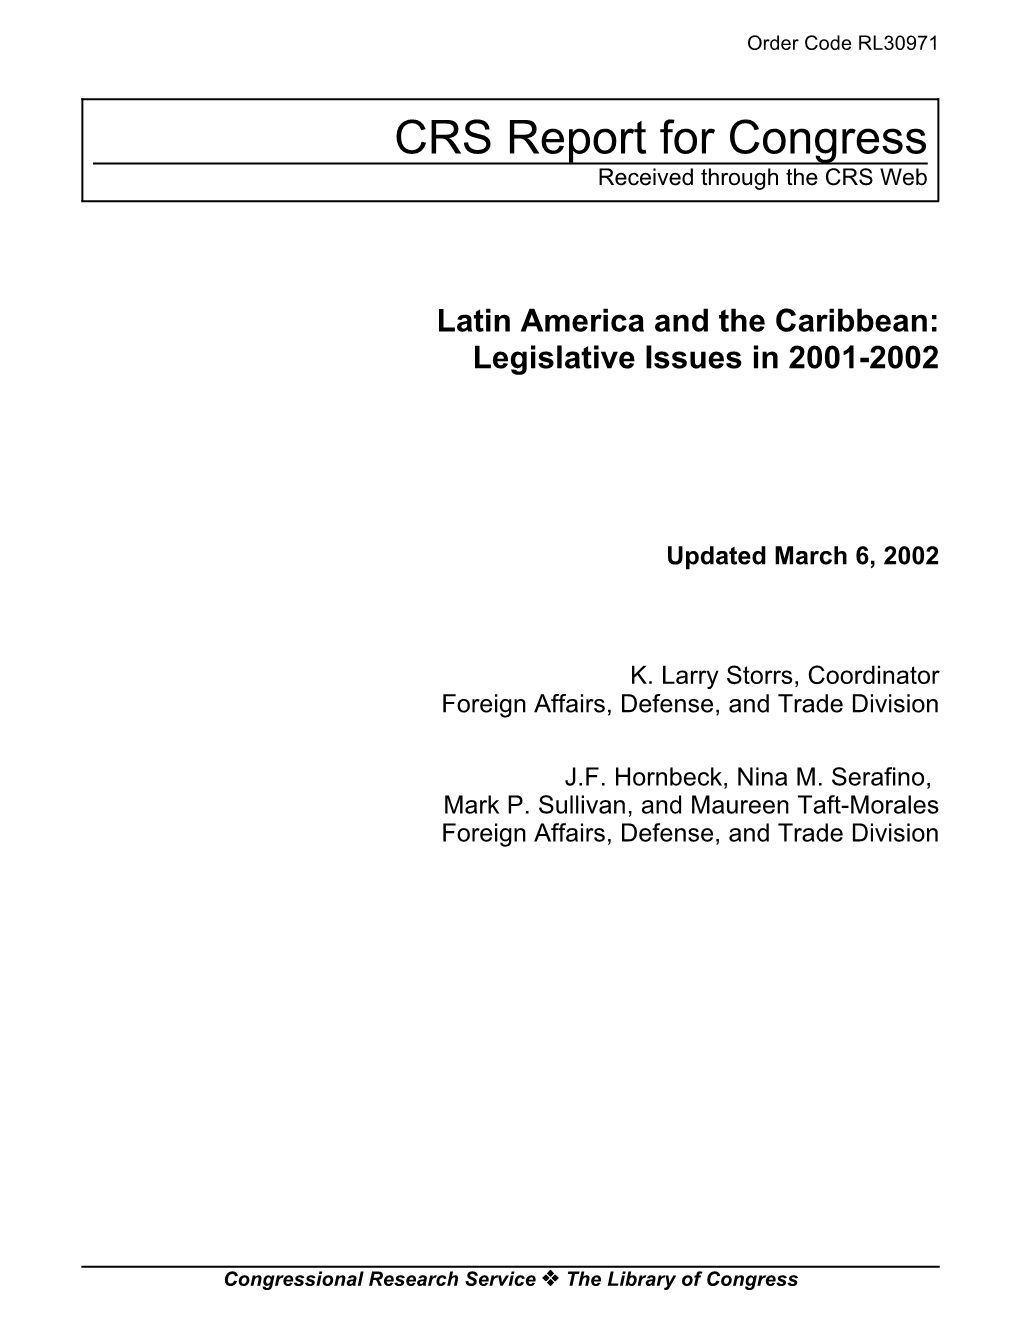 Latin America and the Caribbean: Legislative Issues in 2001-2002